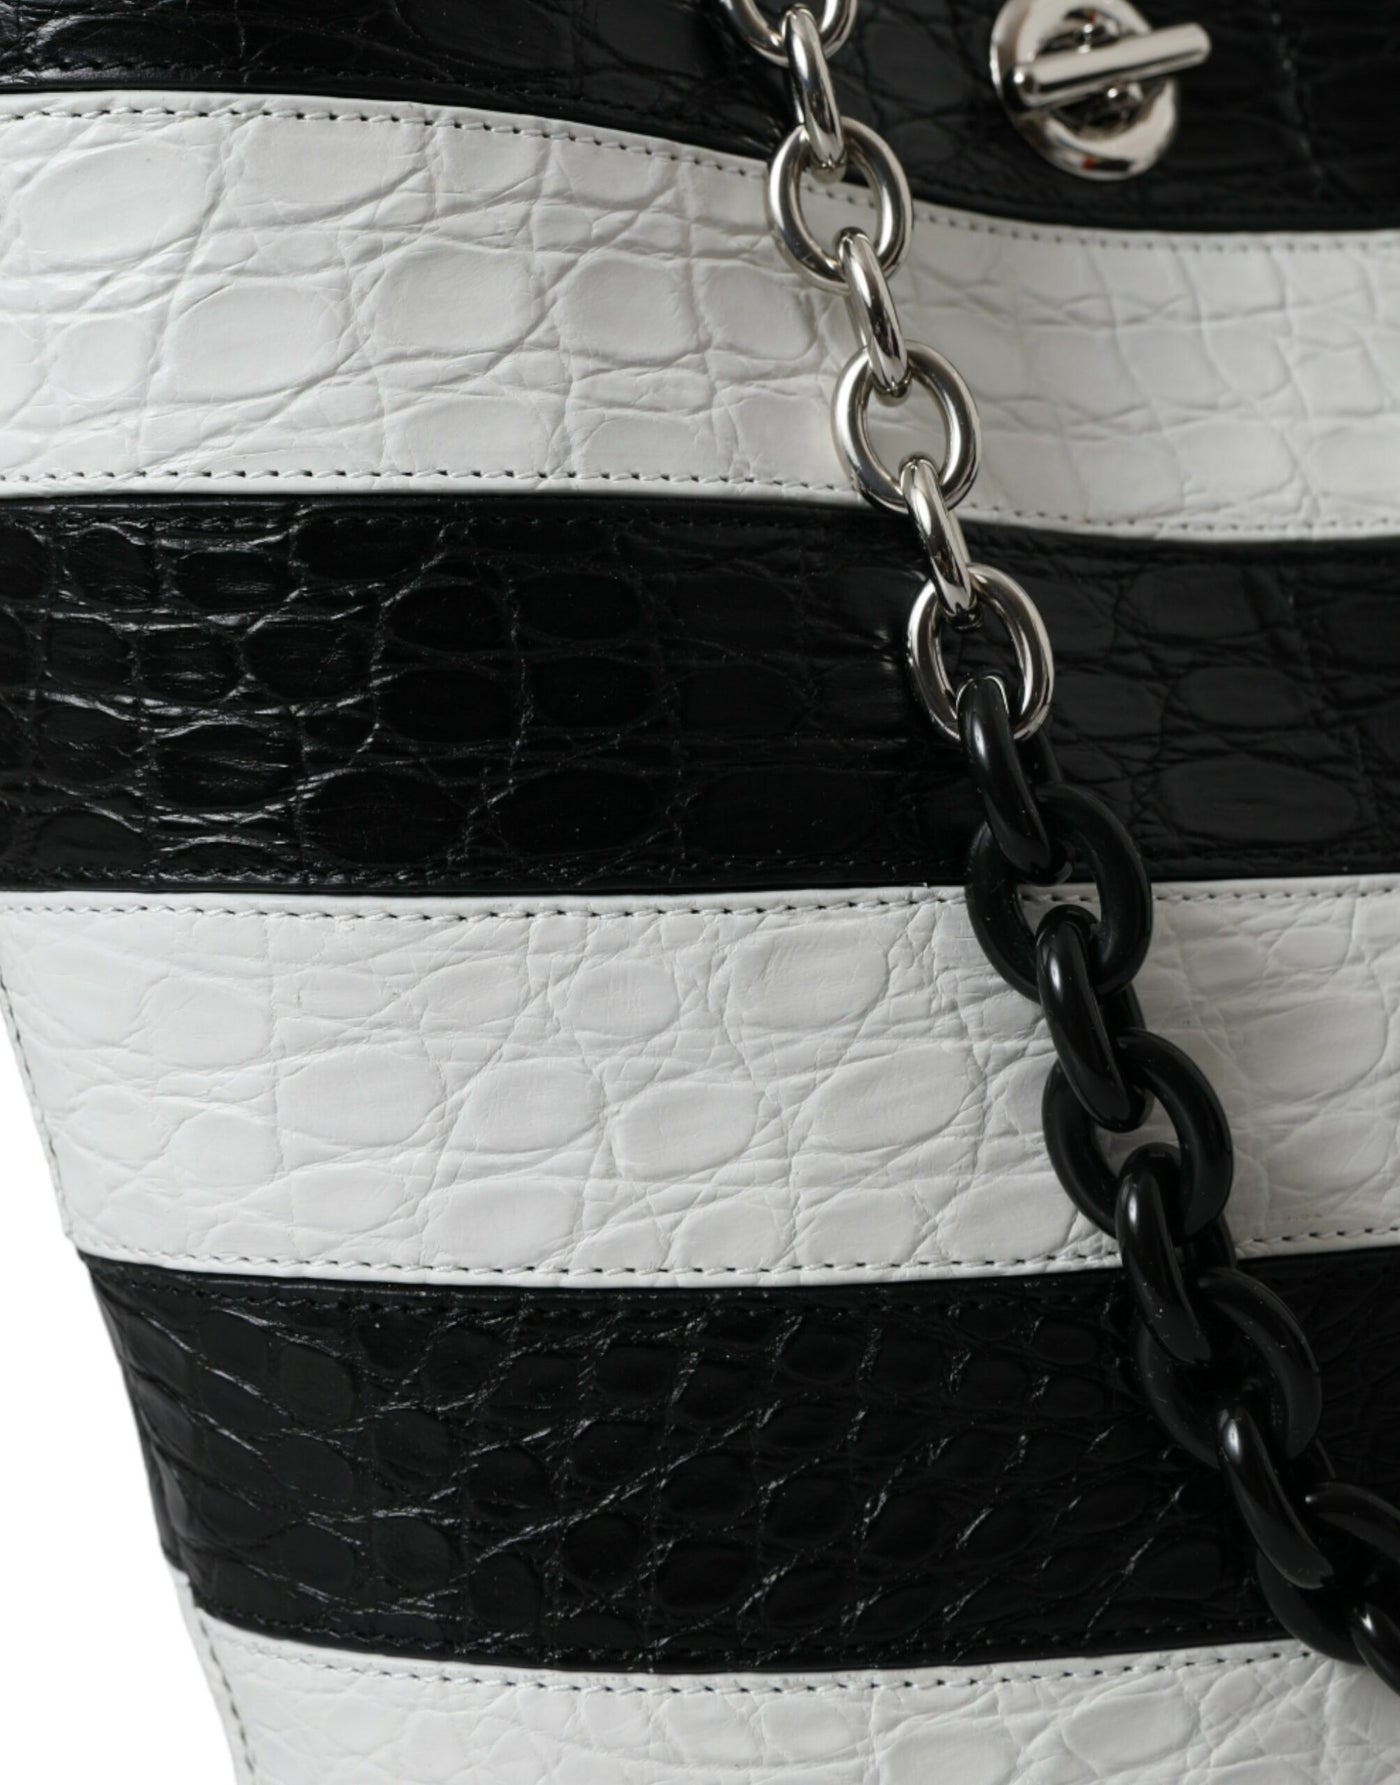 Balenciaga Chic Crocodile Leather Maxi Bucket Bag